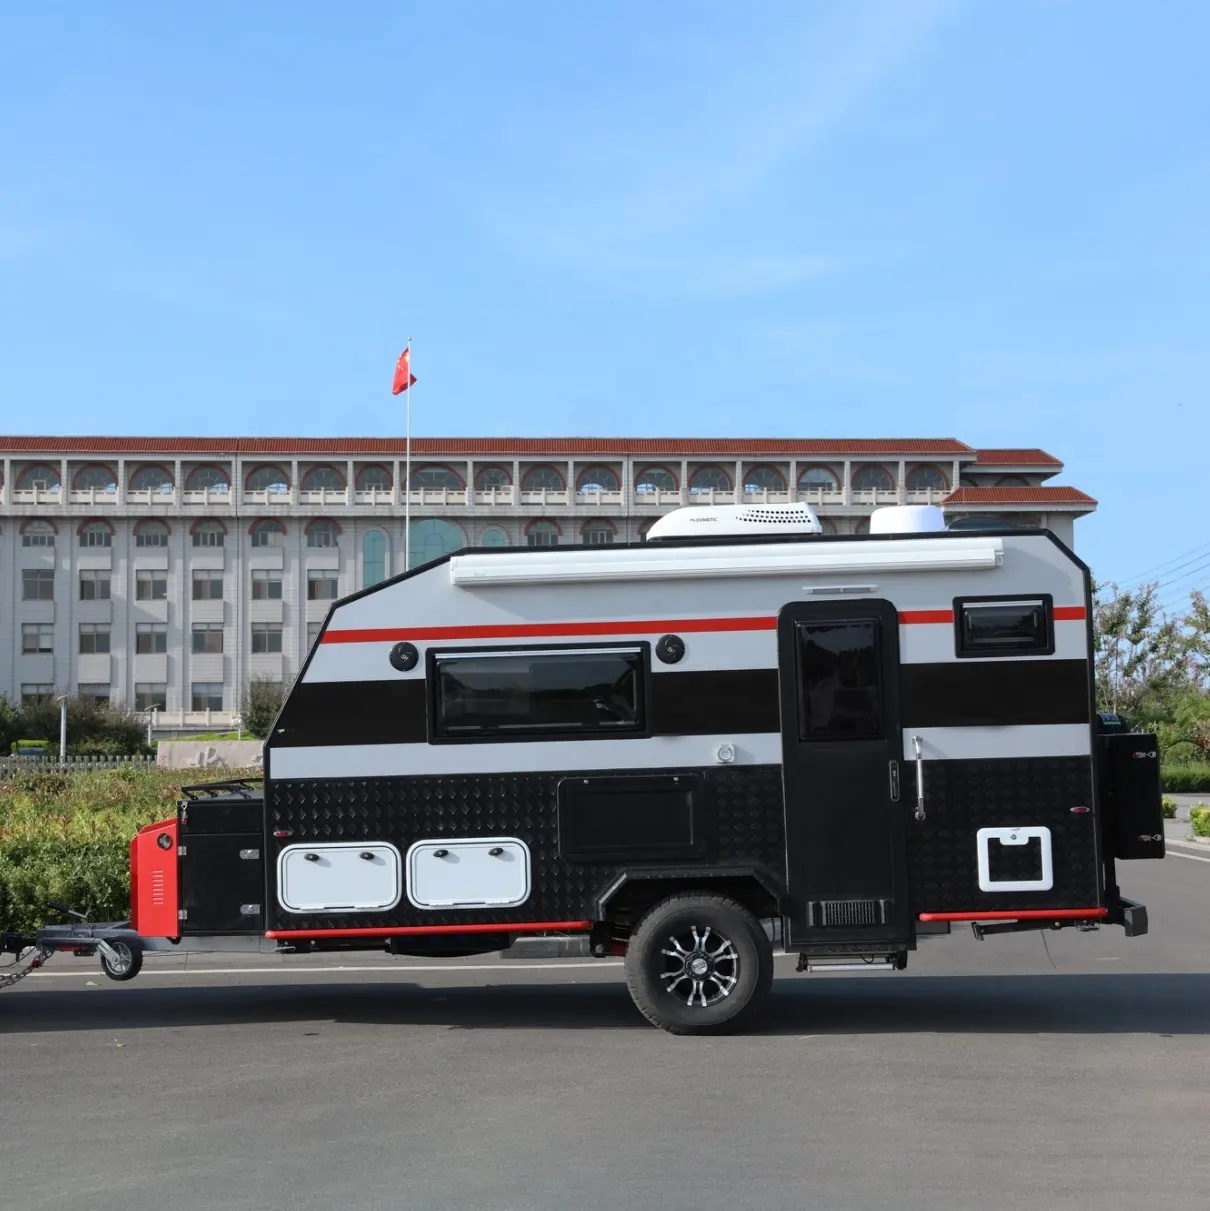 Light Weight Hybrid Caravan Australian Standard Caravan Motorhome Caravan Motor Home With Slide Out Kitchen